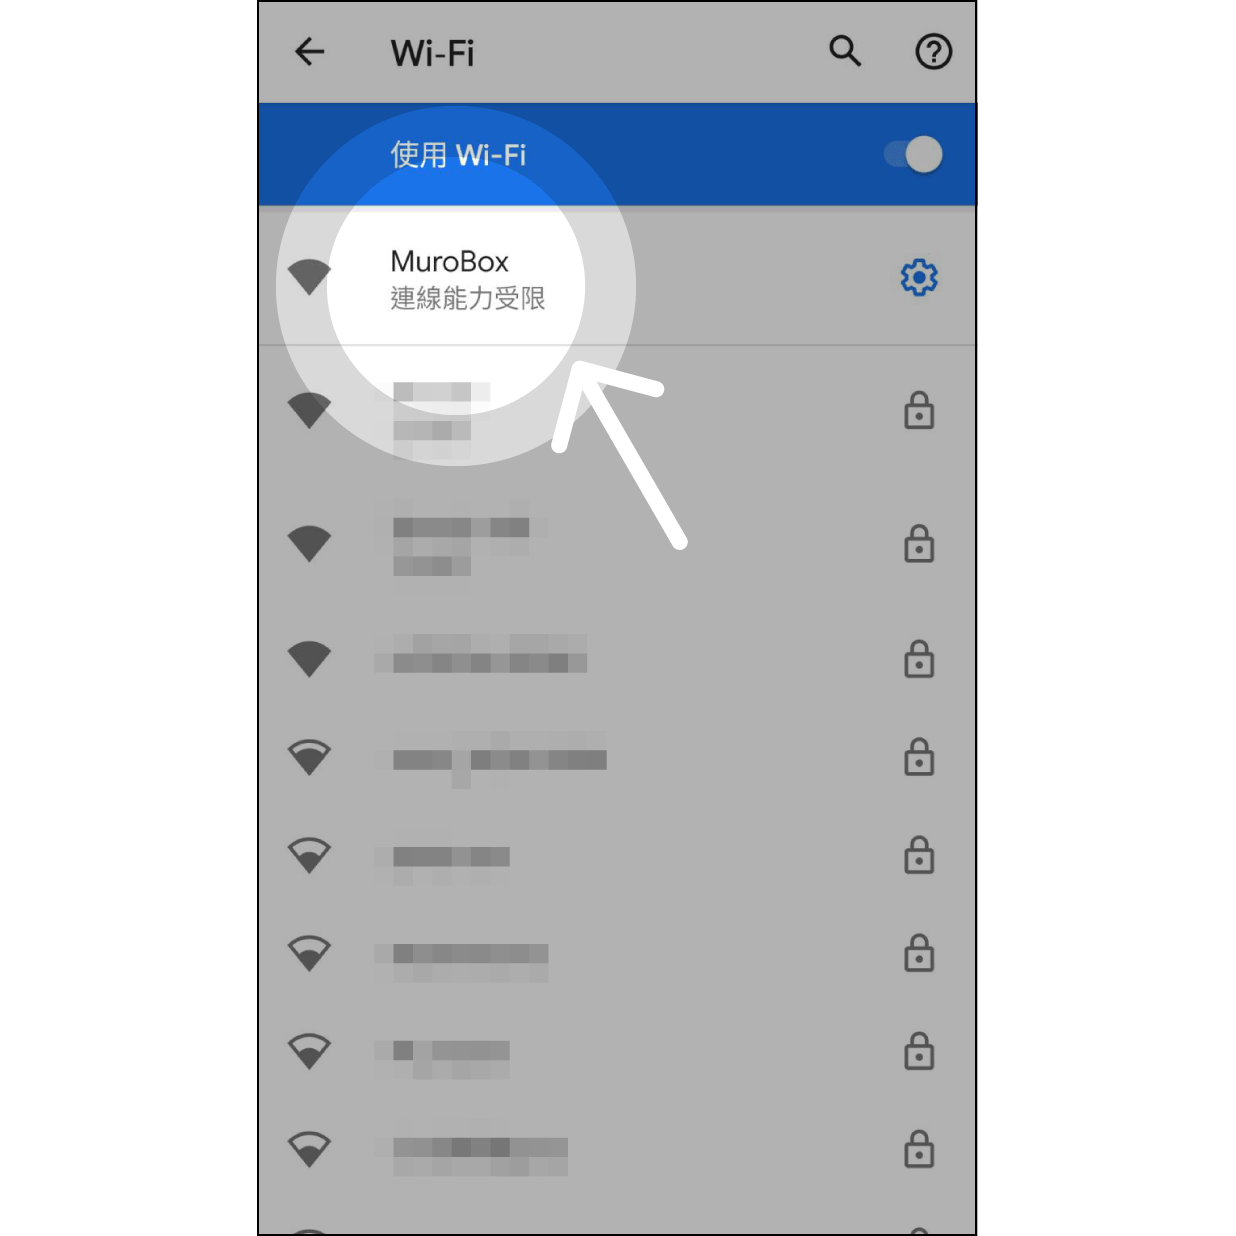 6. 以 Wi-Fi 連線 MuroBox。新版 Android 的手機會自動連線 Muro Box。若是舊版 Android 則需手動點下方「Wi-Fi 設定」後，對名稱 為「MuroBox」的網路進行連線。連線成功後，按螢幕下方返回鍵回到 Muro Box app。